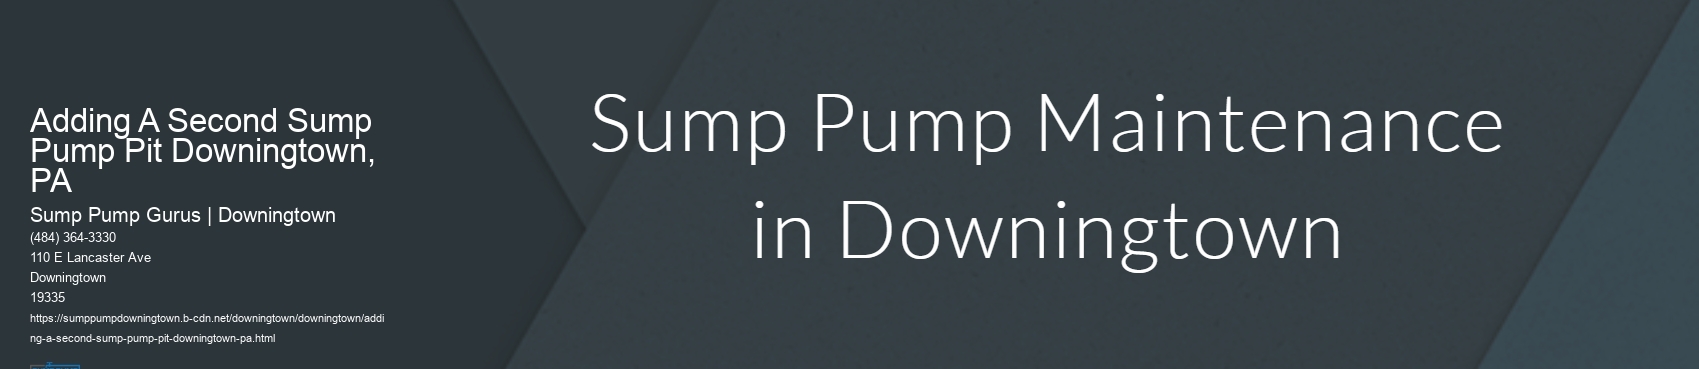 Adding A Second Sump Pump Pit Downingtown, PA